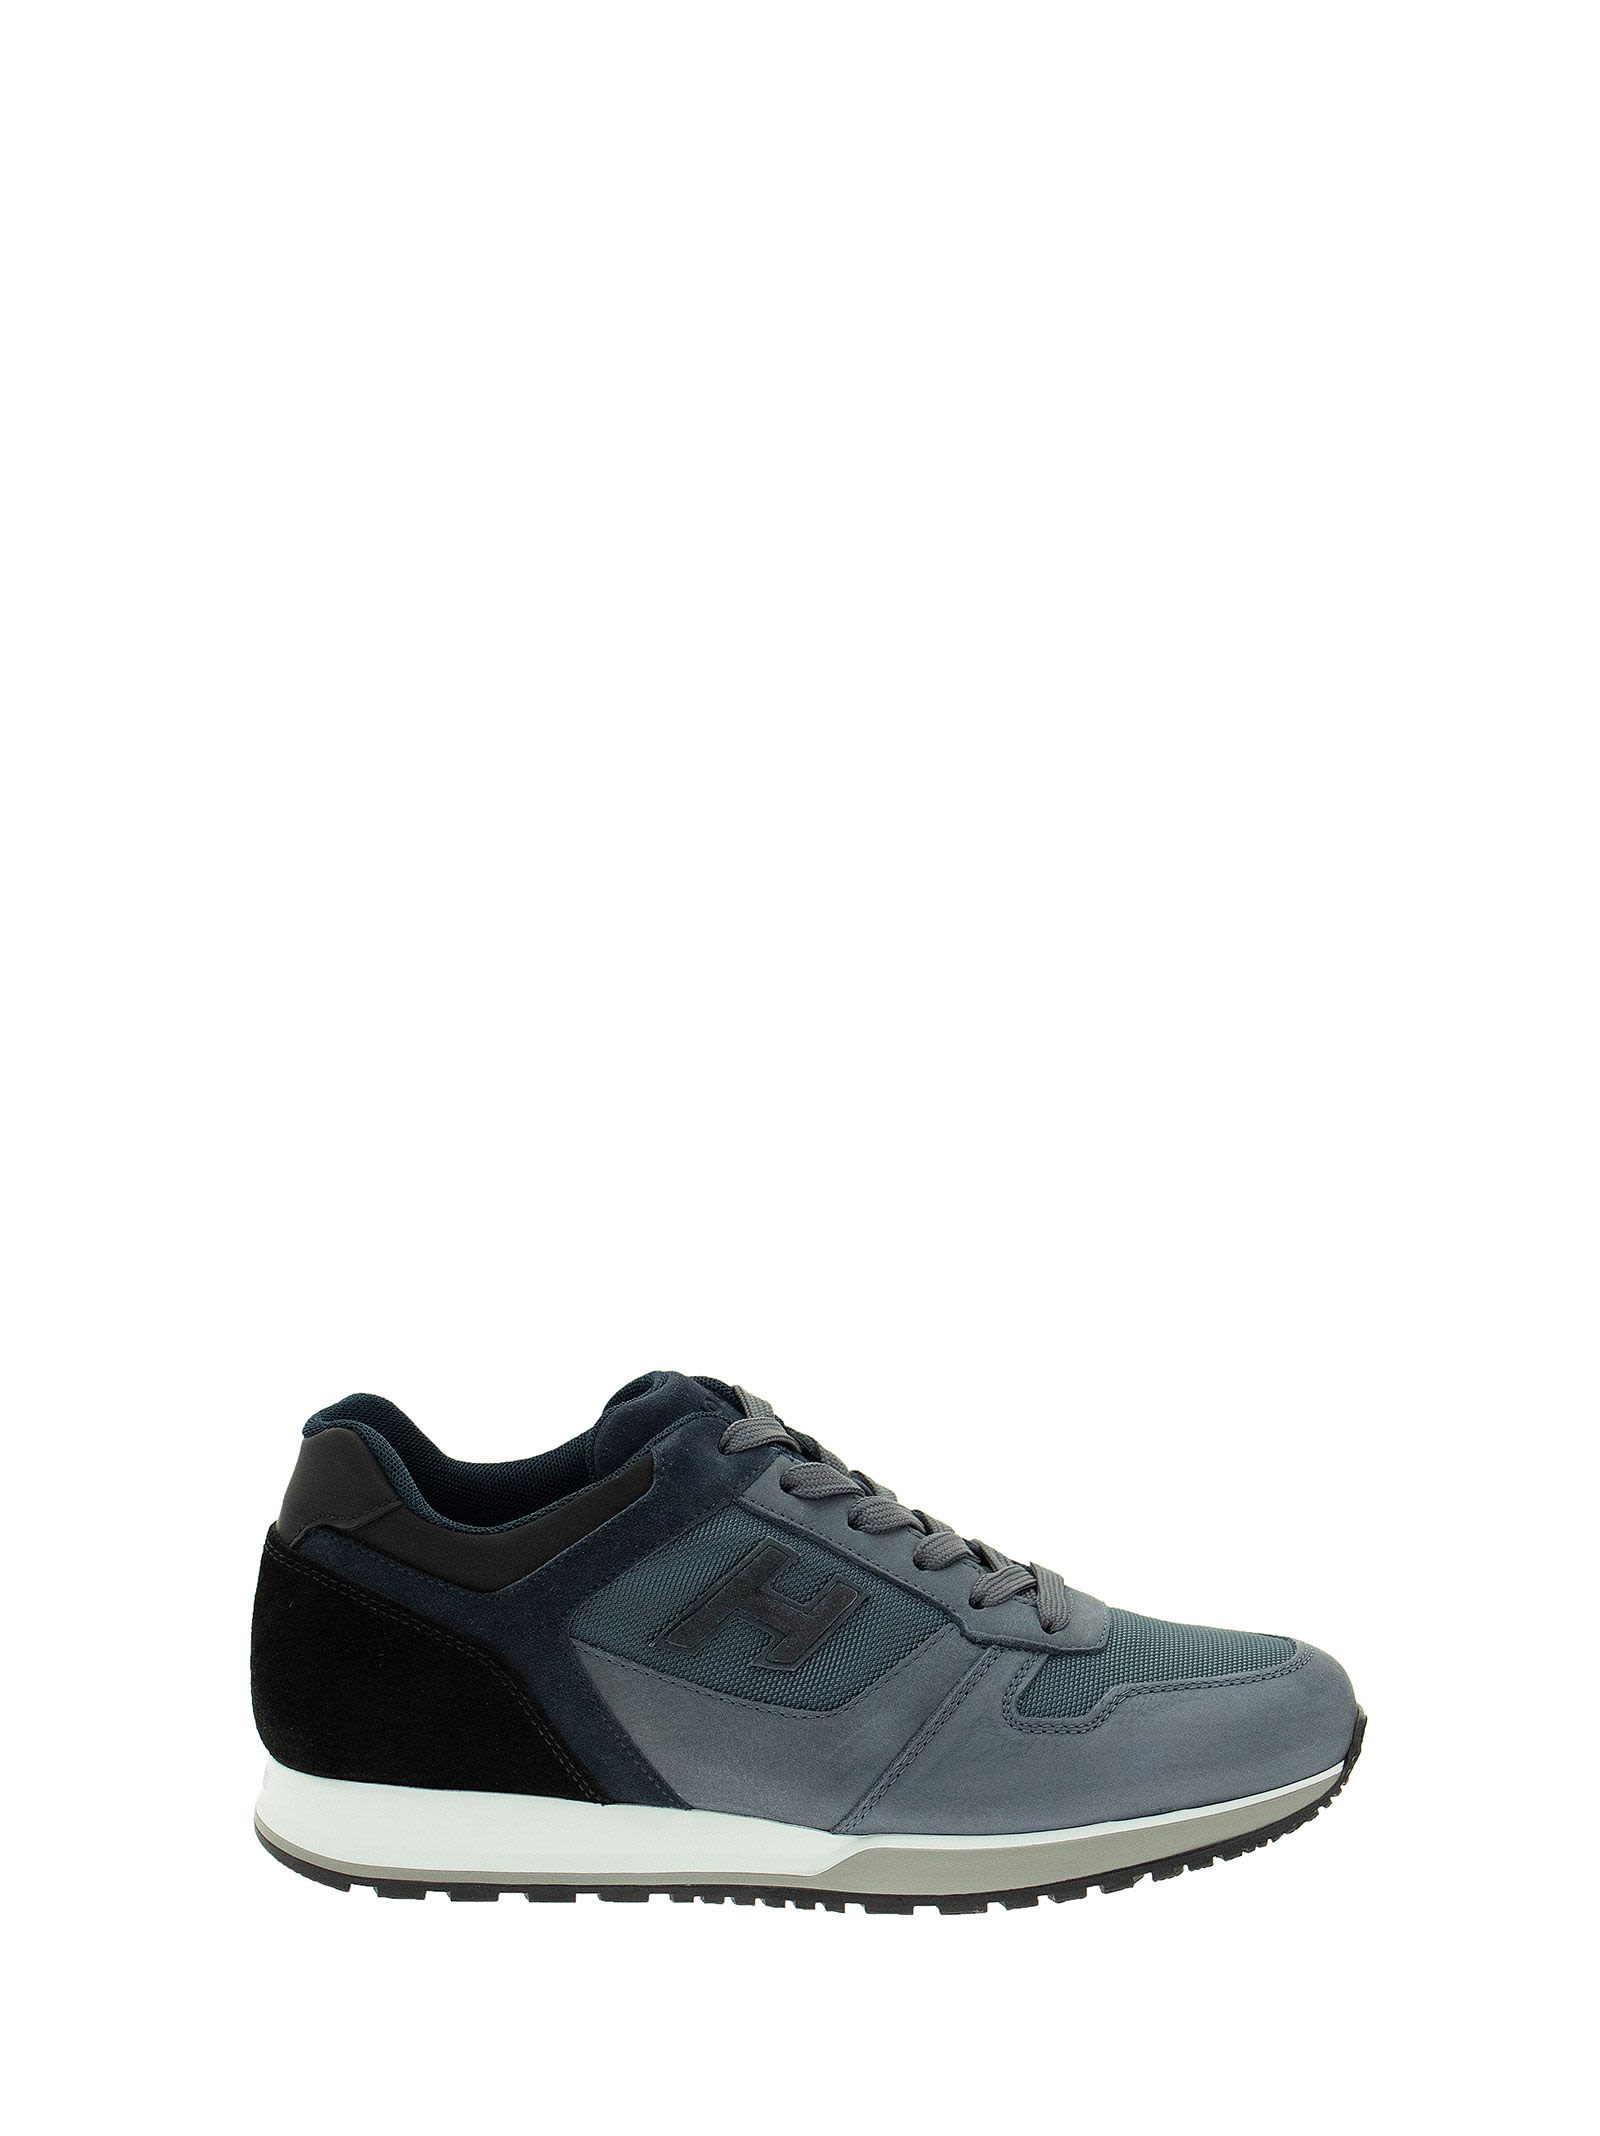 Hogan Sneakers H321 Blue/grey